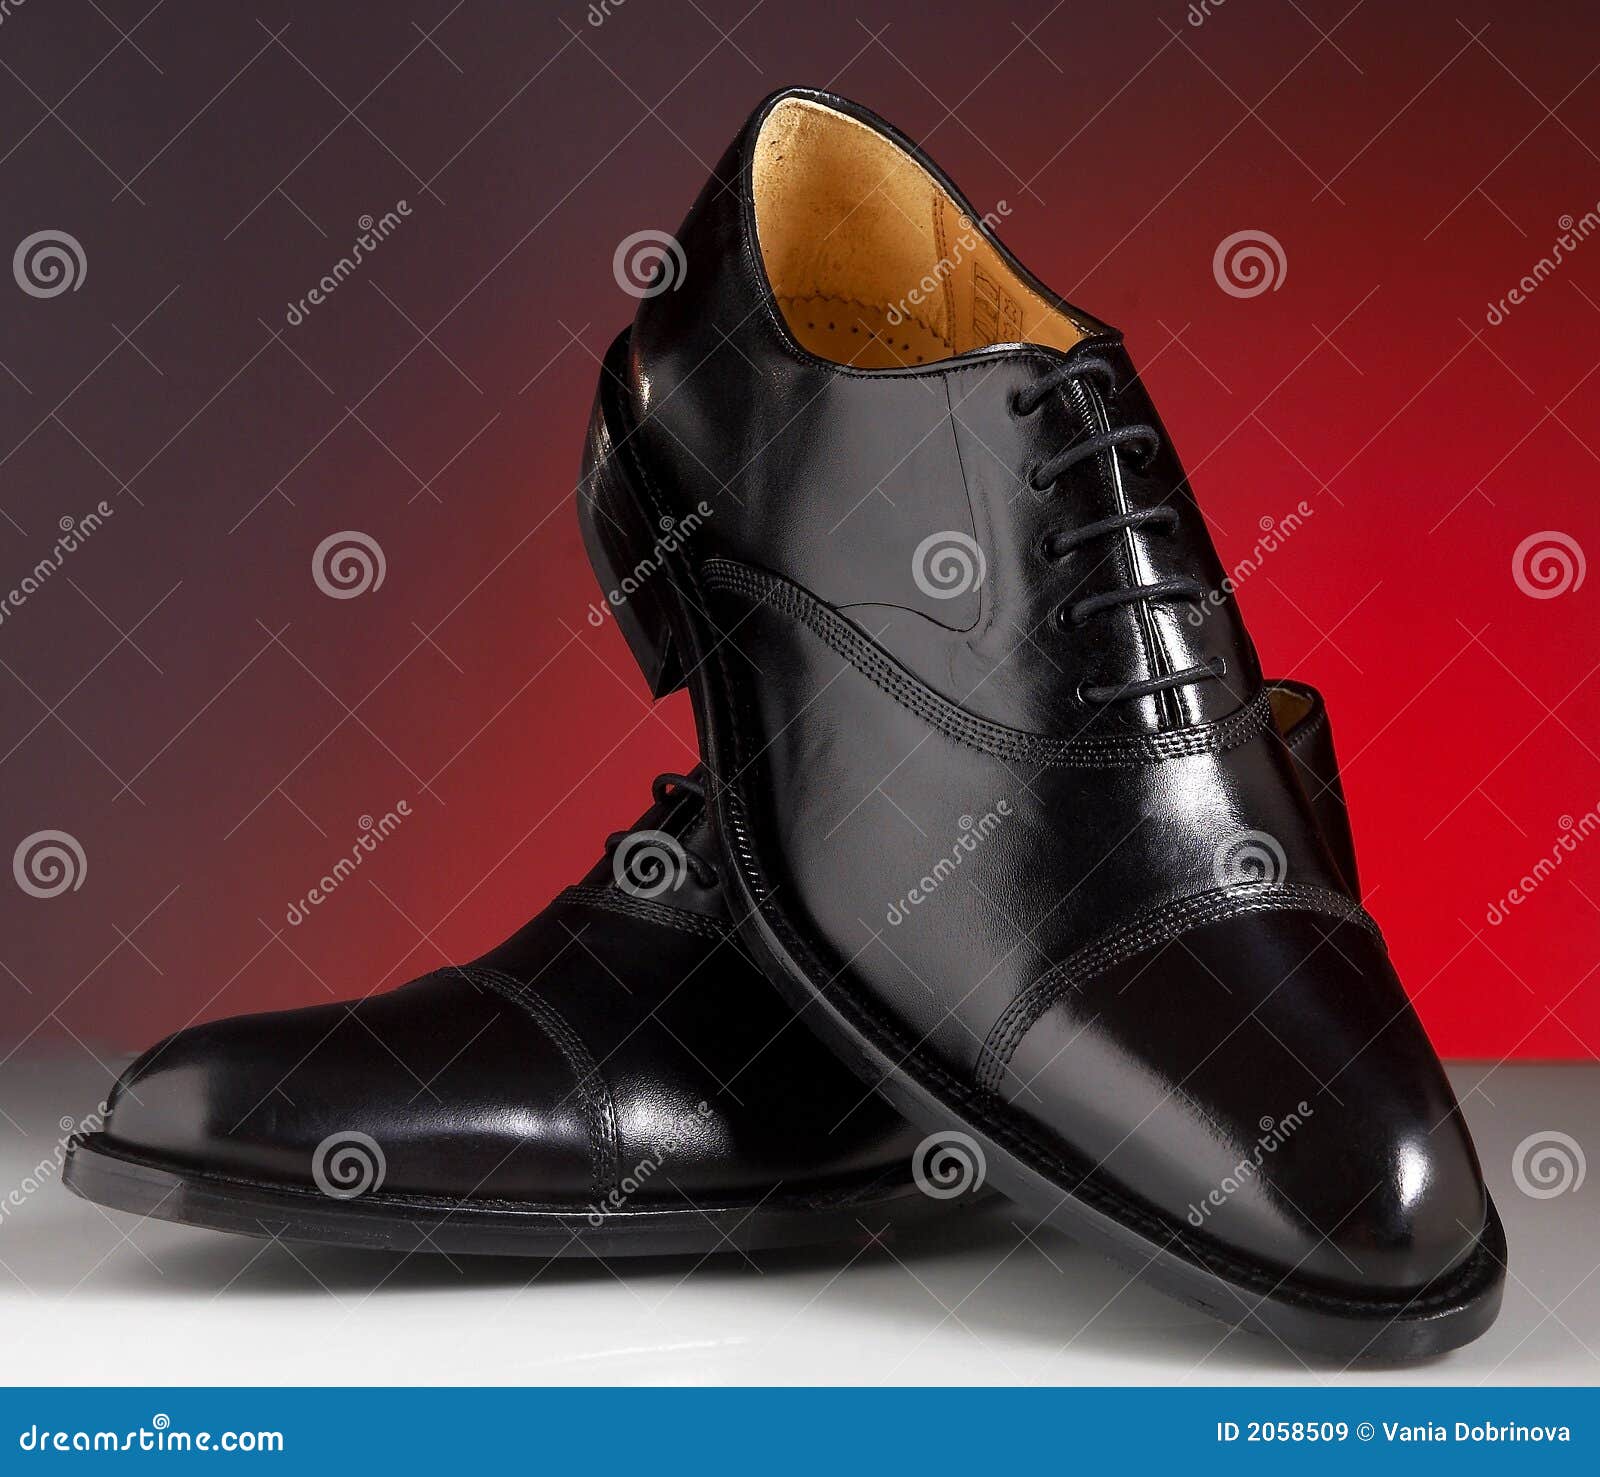 Chaussures de luxe homme